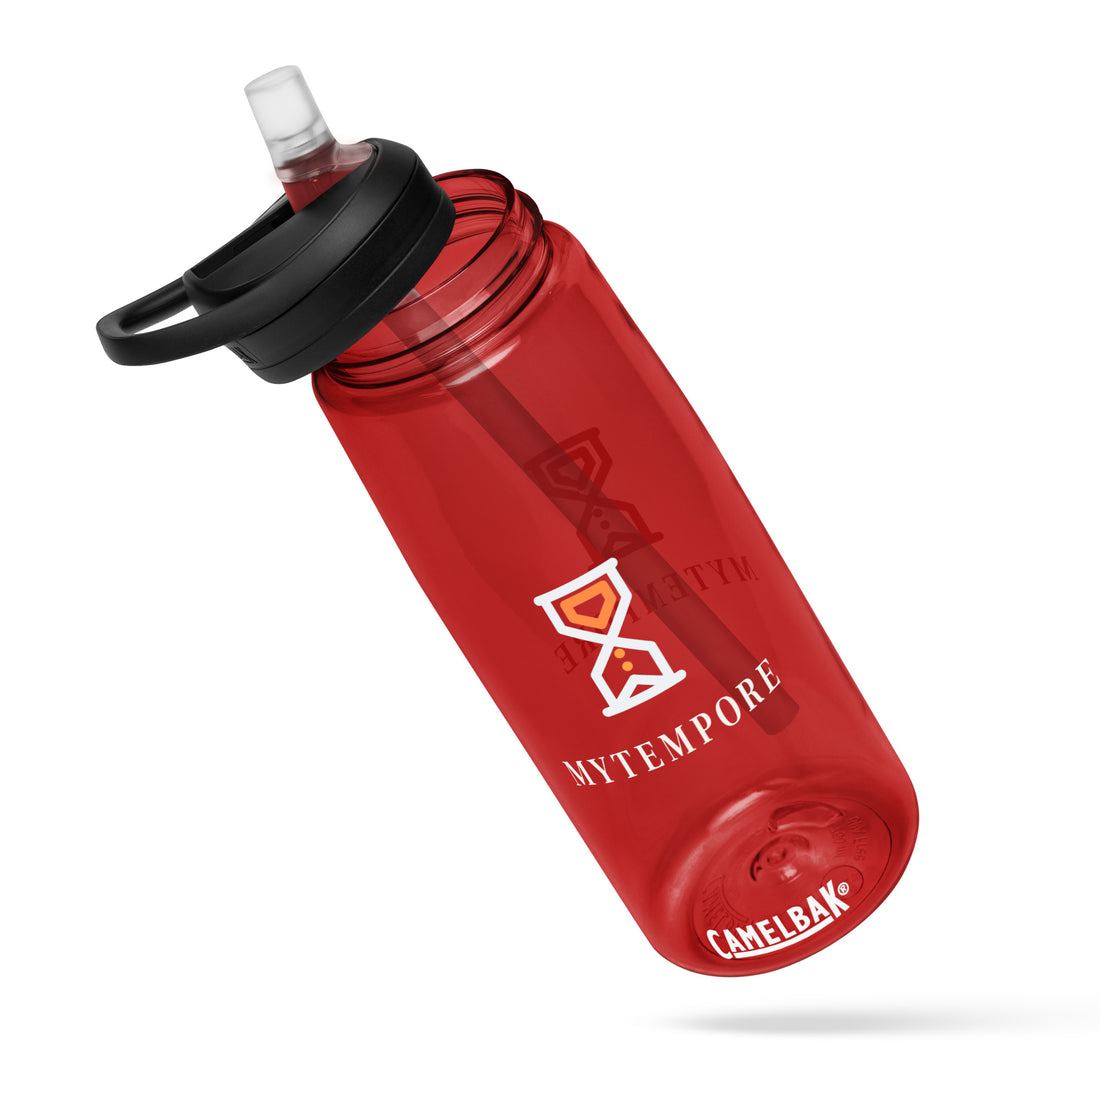 MYTEMPORE Sports water bottle